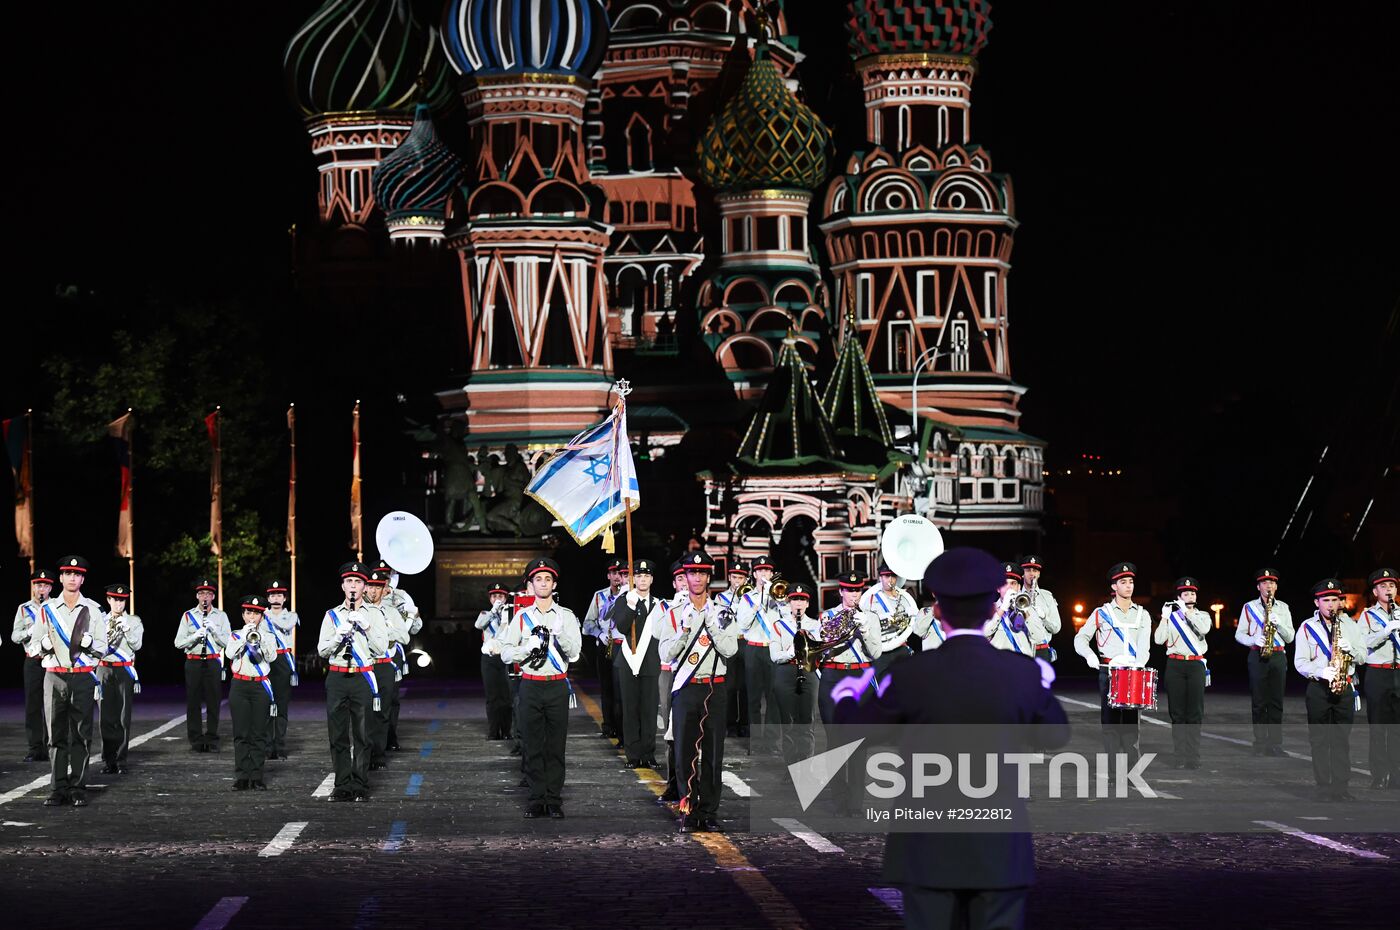 International Military Music Festival “Spasskaya Tower” kicks off